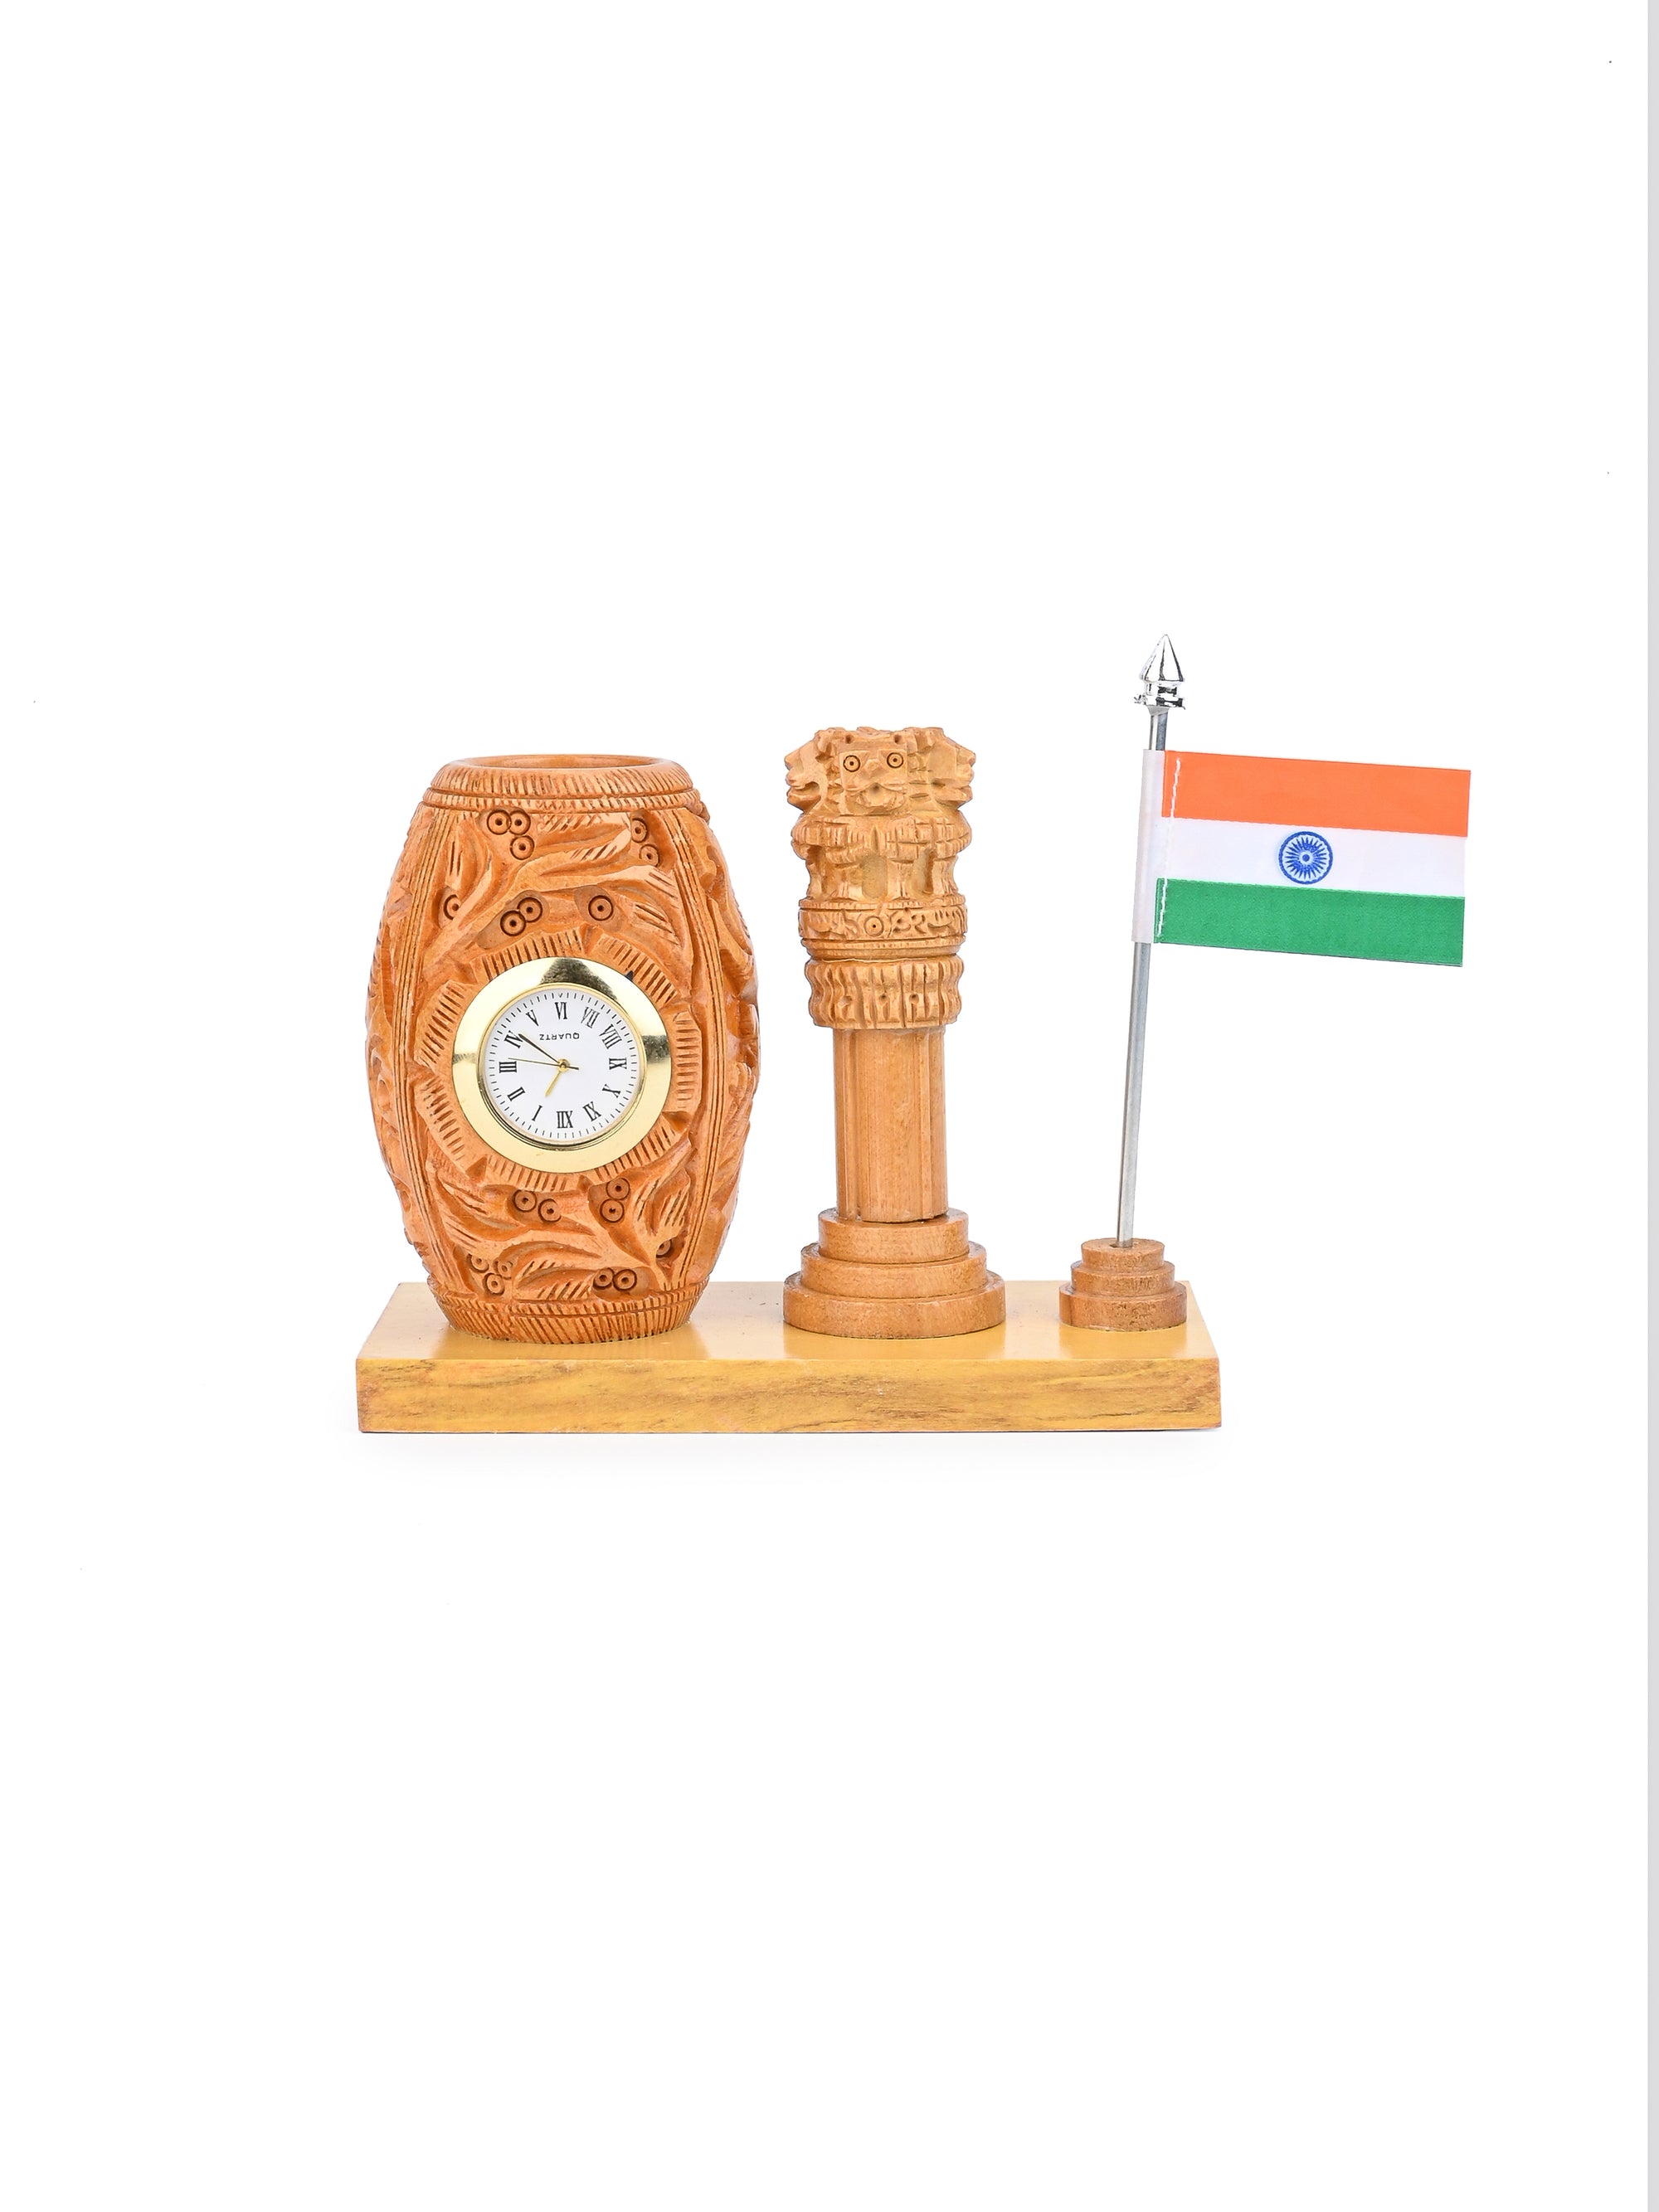 Ashoka Pillar Pen Holder with Indian National Flag crafted from Kadam wood